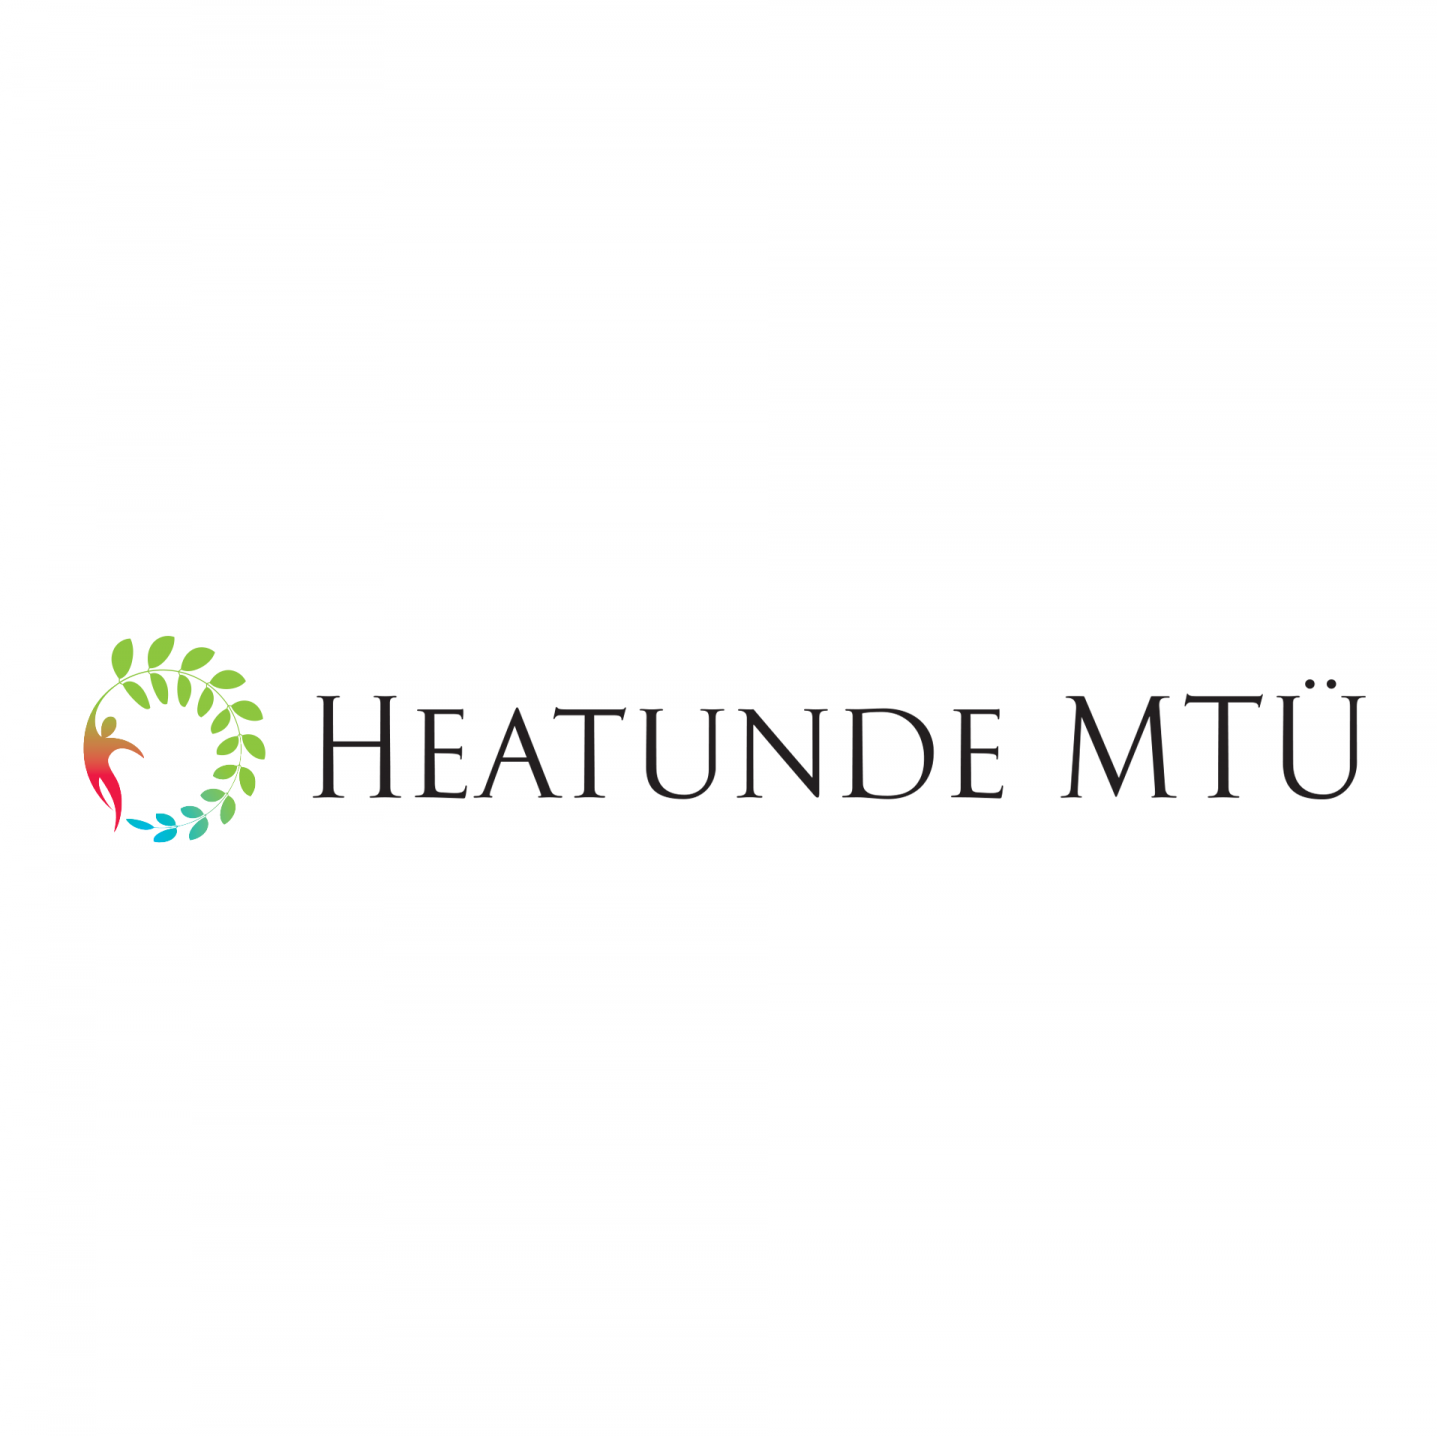 HEATUNDE MTÜ - Other retail sale not in stores, stalls or markets in Tallinn